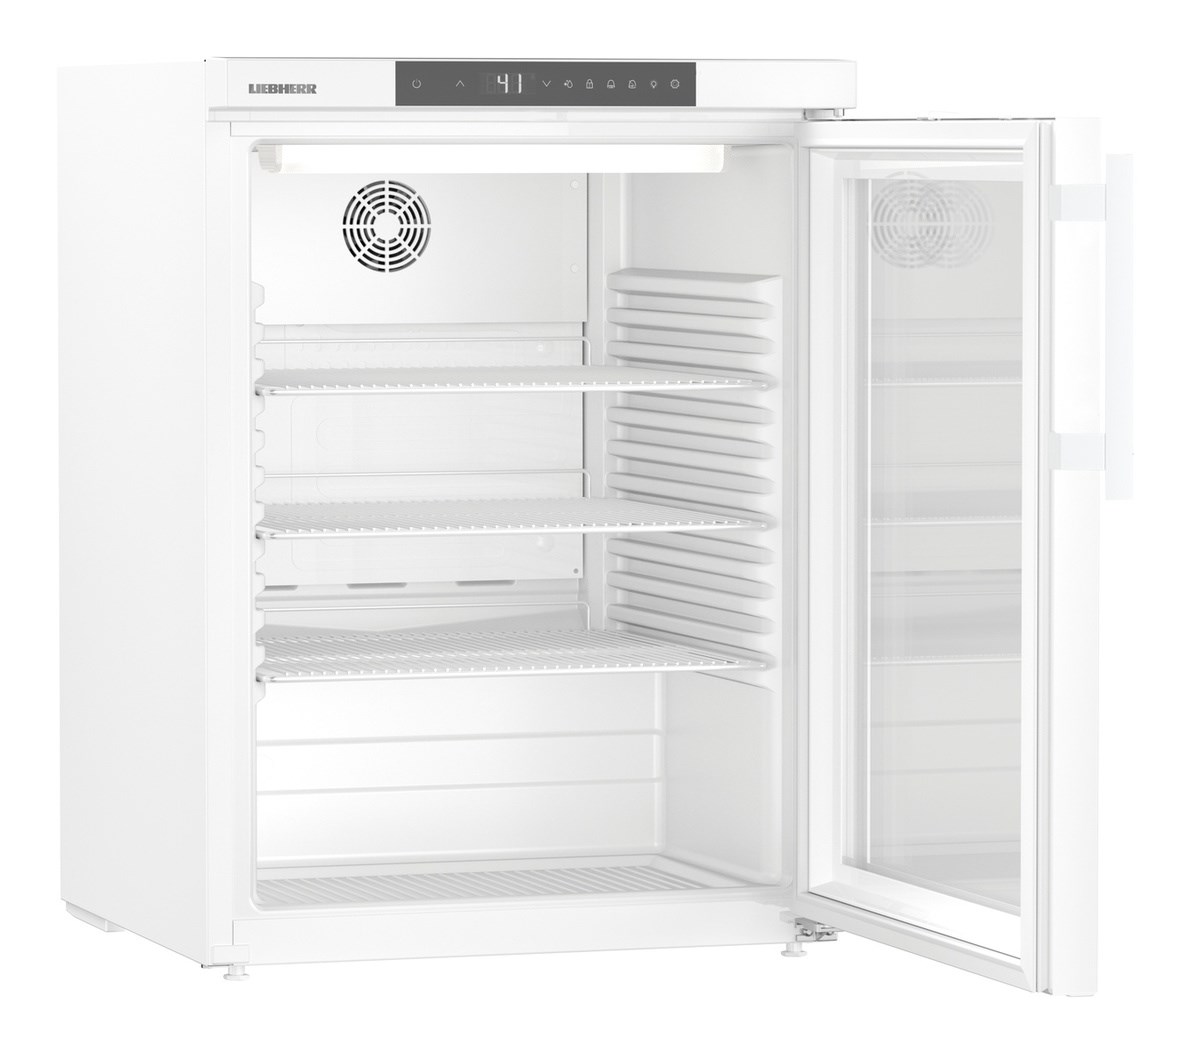 холодильный шкаф fkuv 1613